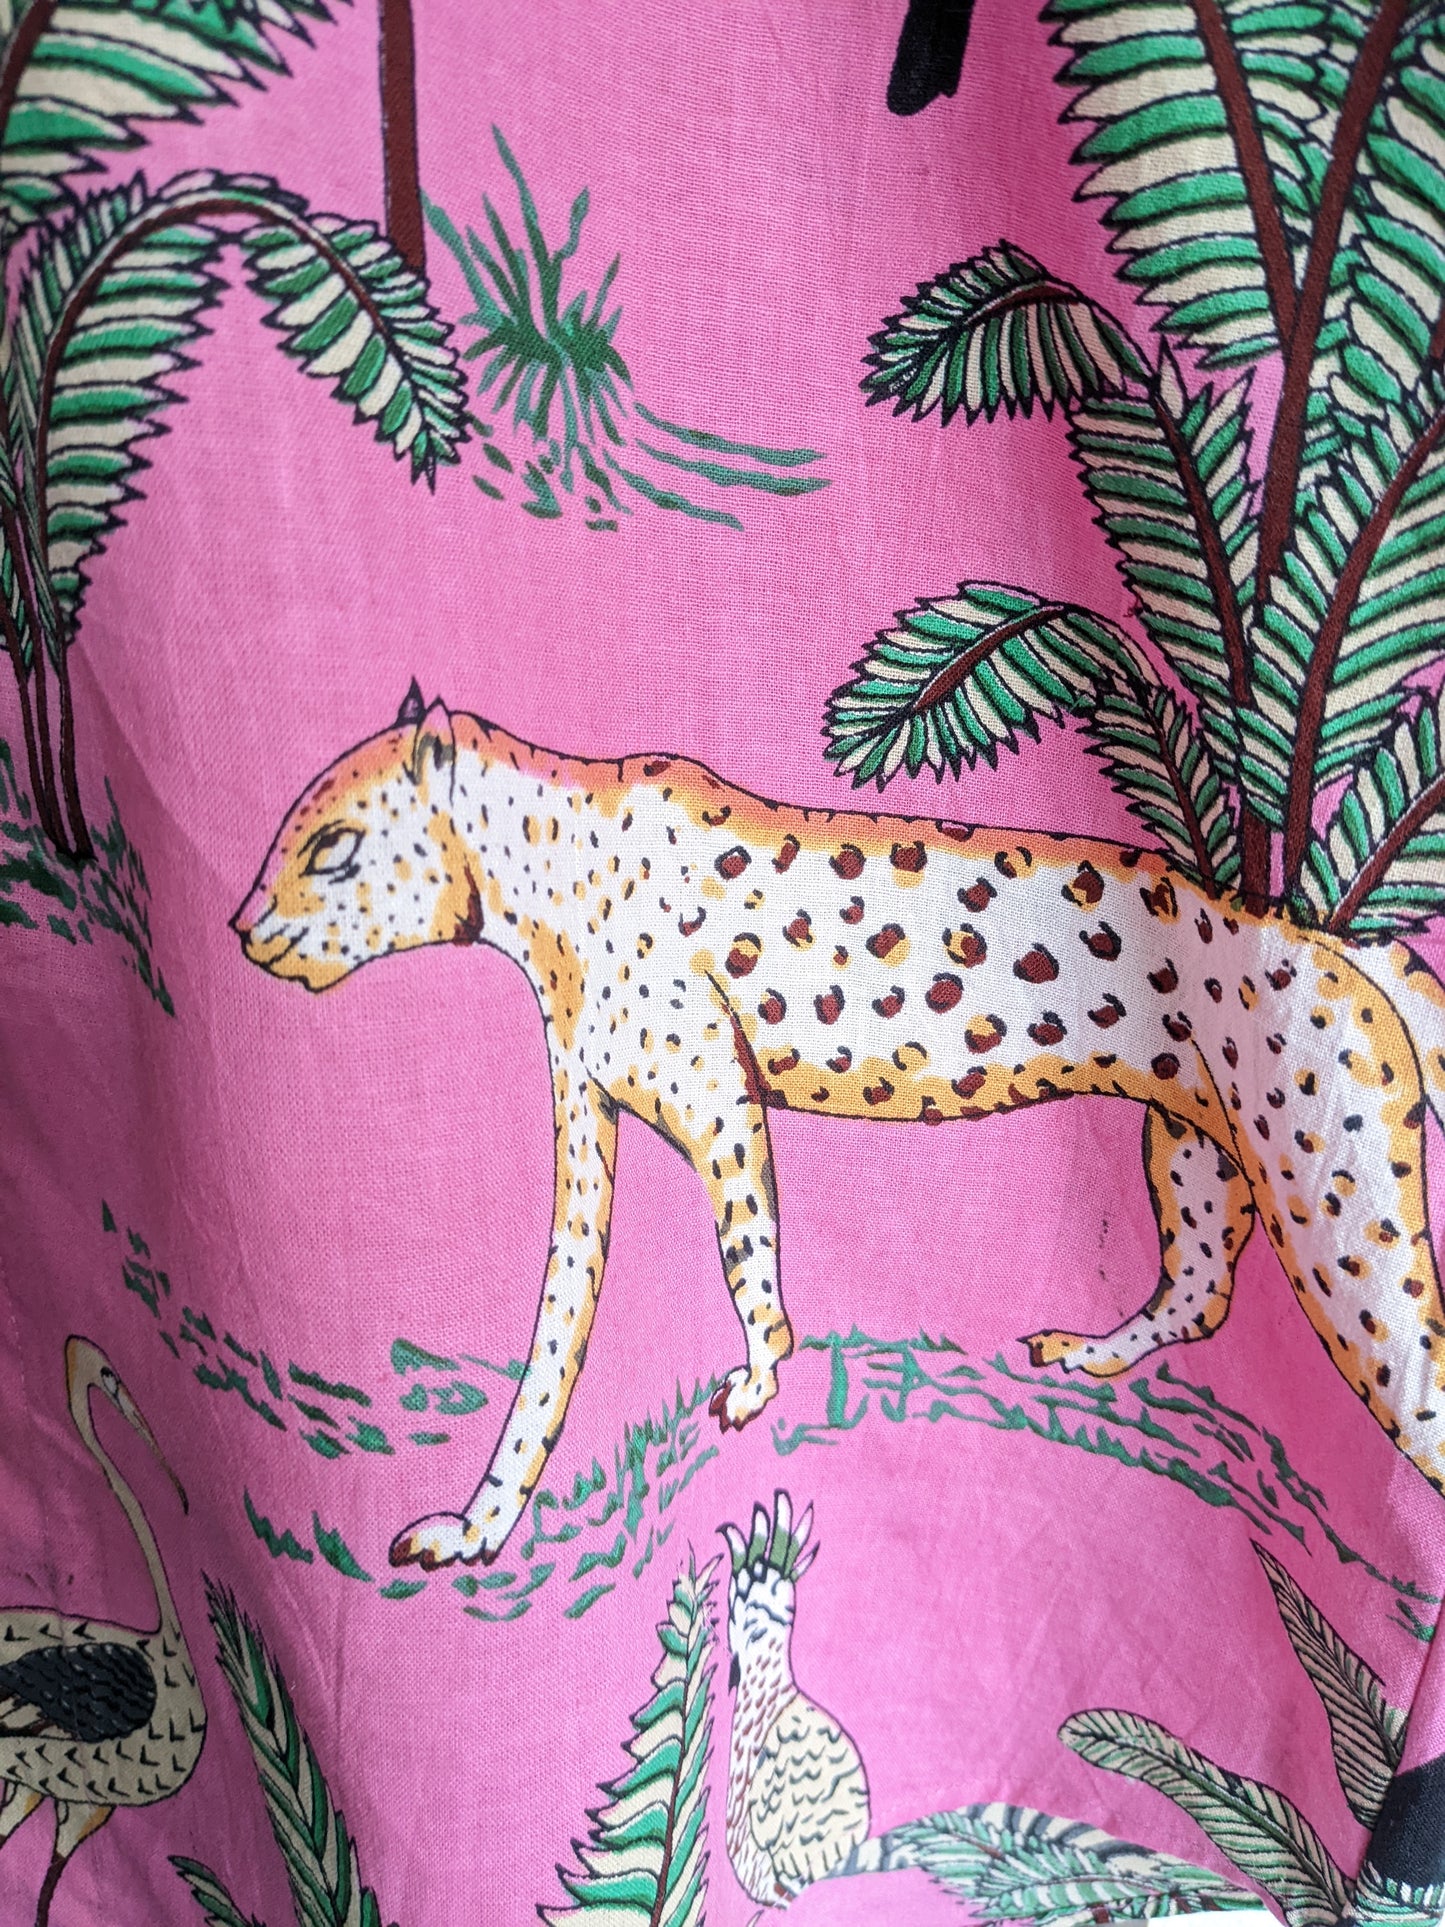 Pink Tropical Print Shirt